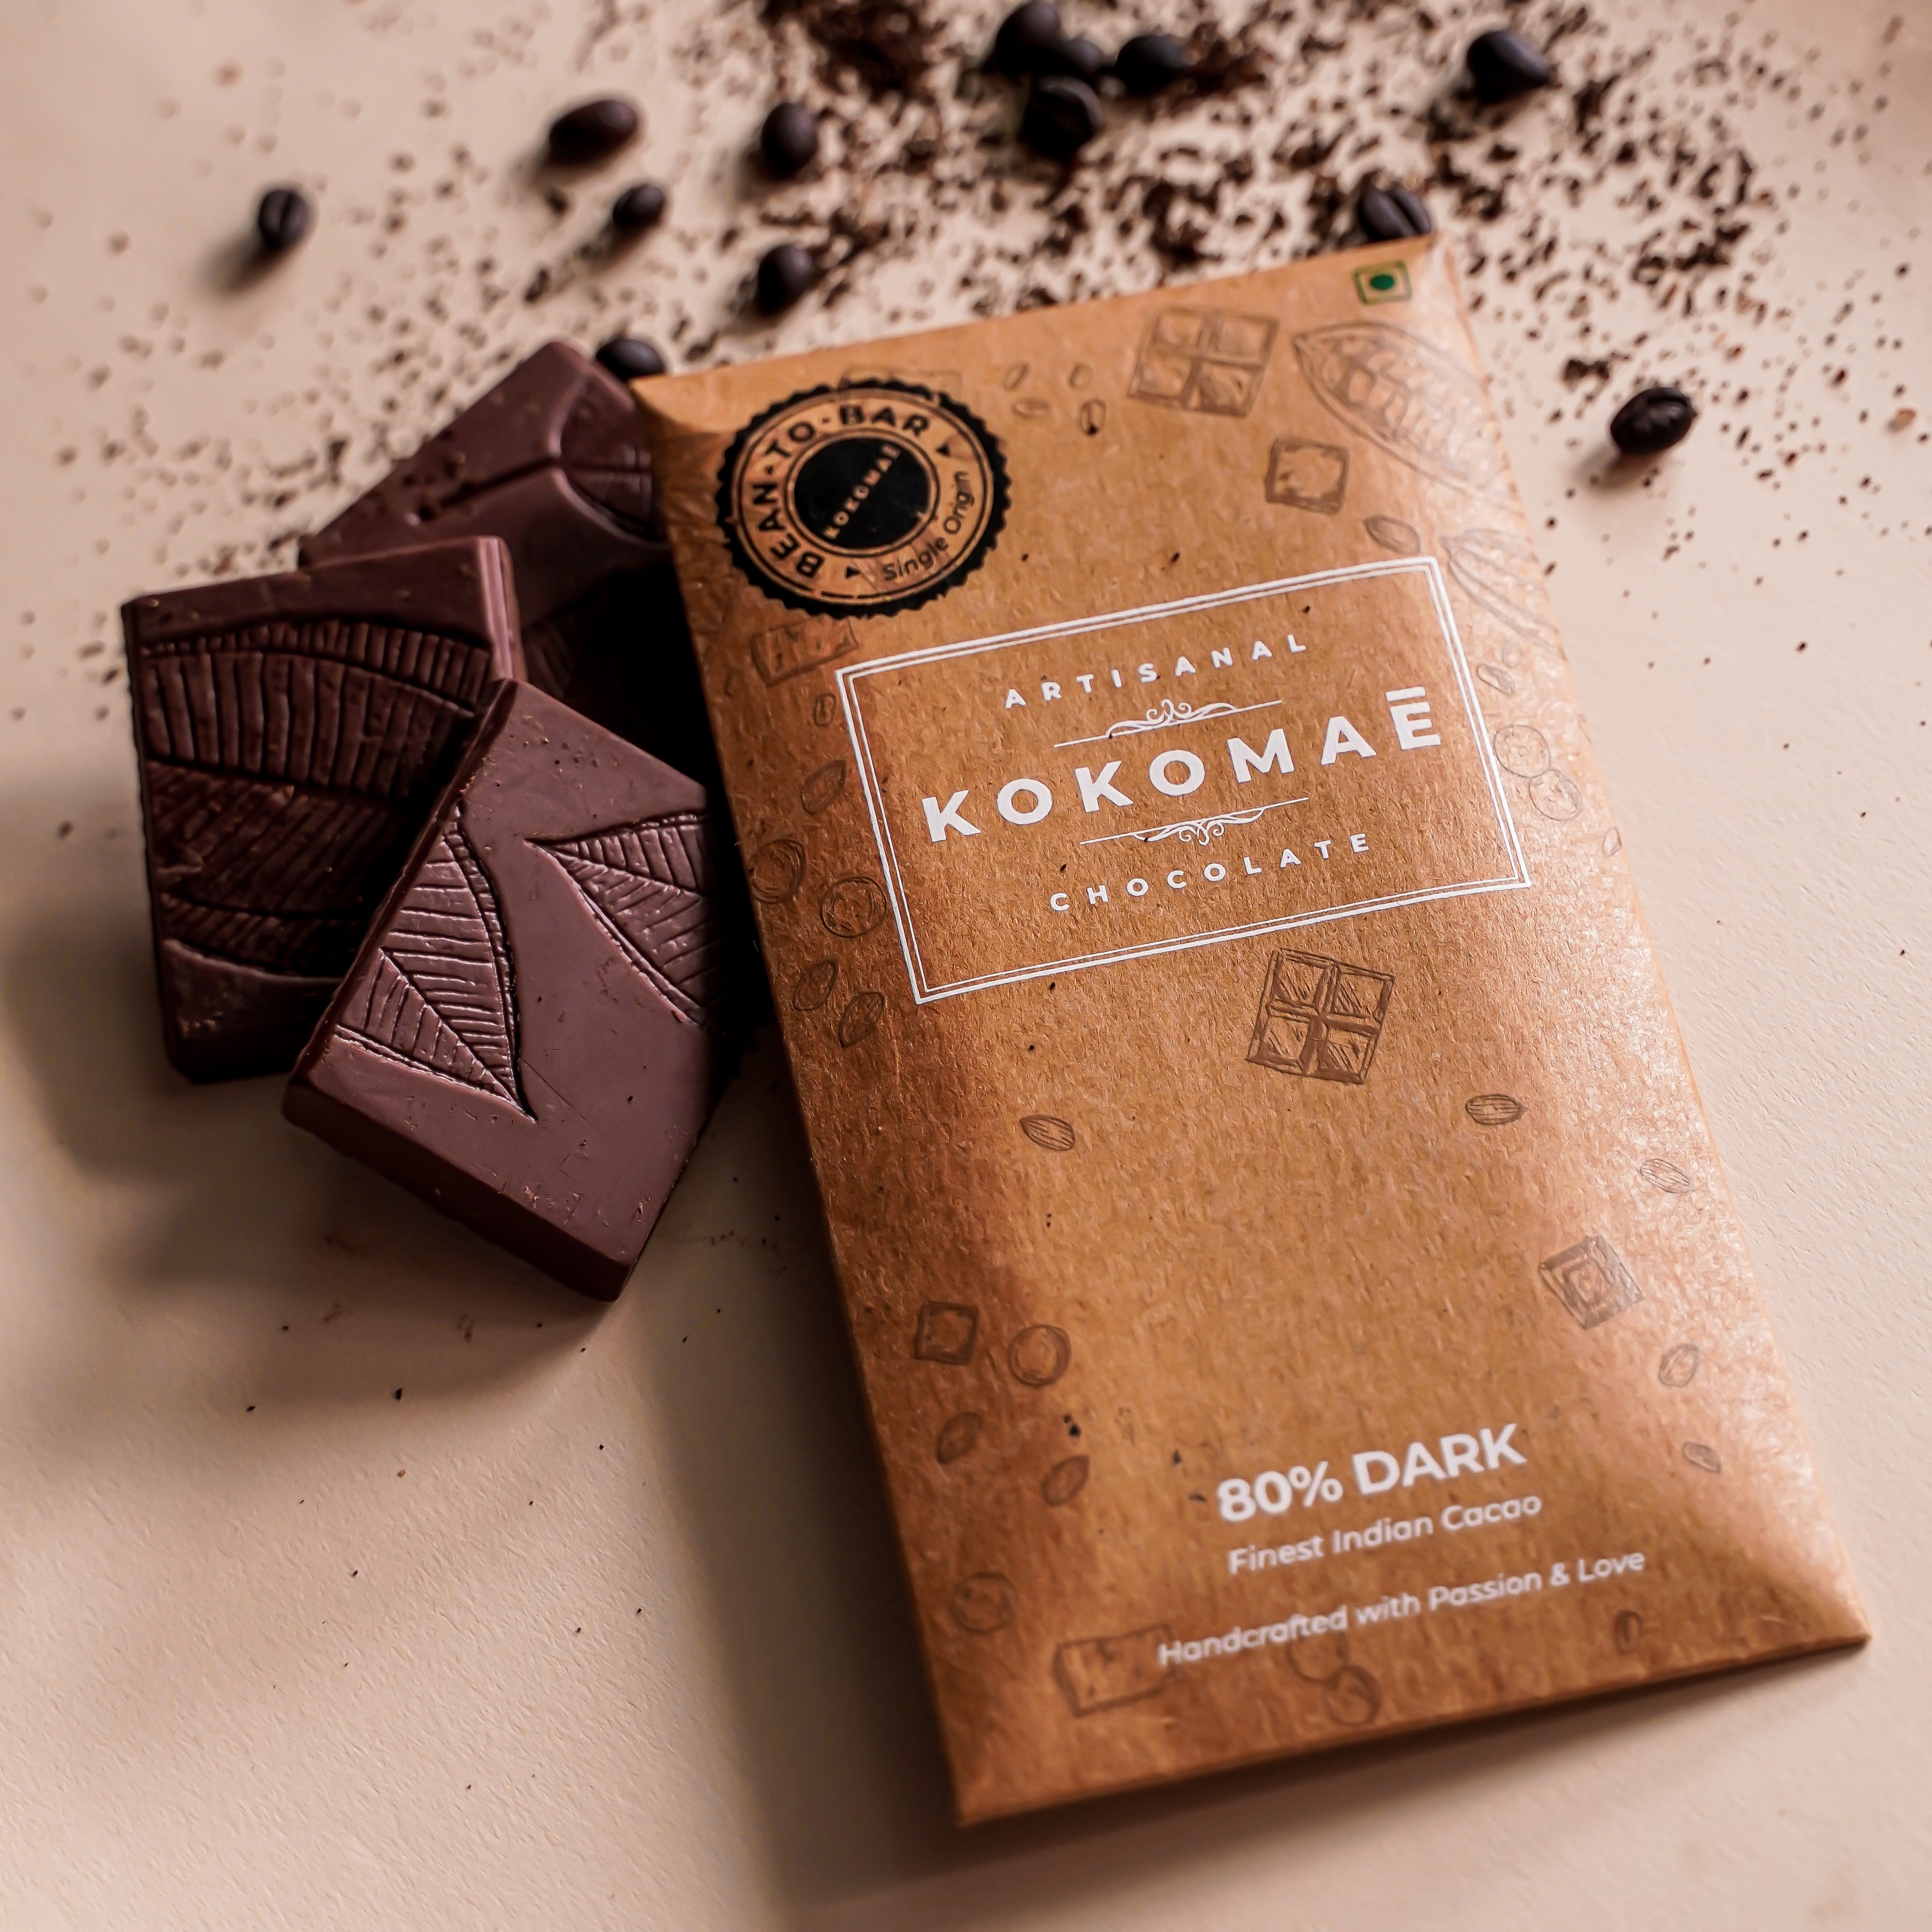 Kokomaē Bean to Bar 80% Organic Dark Chocolate Made of Finest Cocoa Beans from Idukki Region